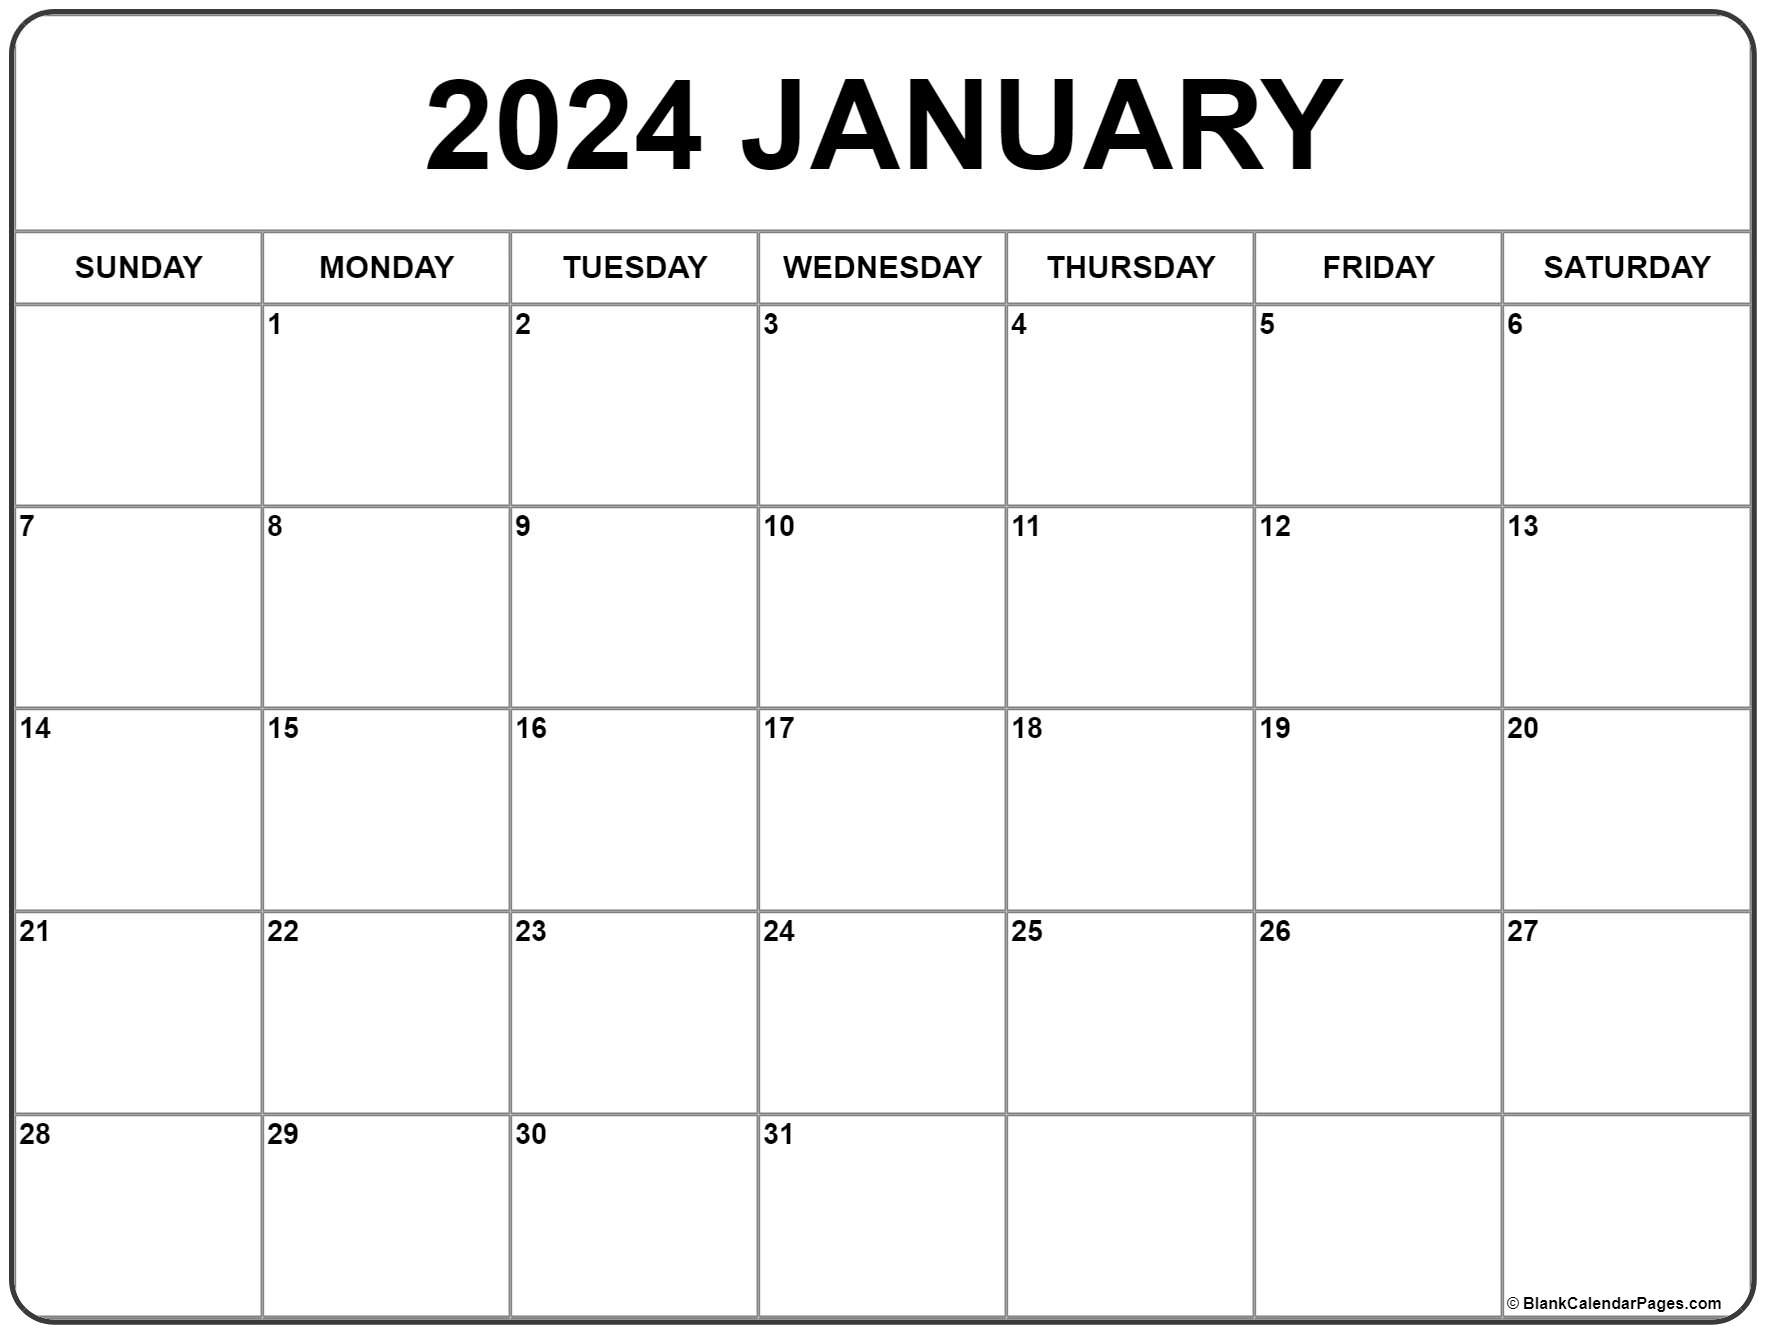 January 2024 Calendar | Free Printable Calendar for 2024 Calendar Printable January